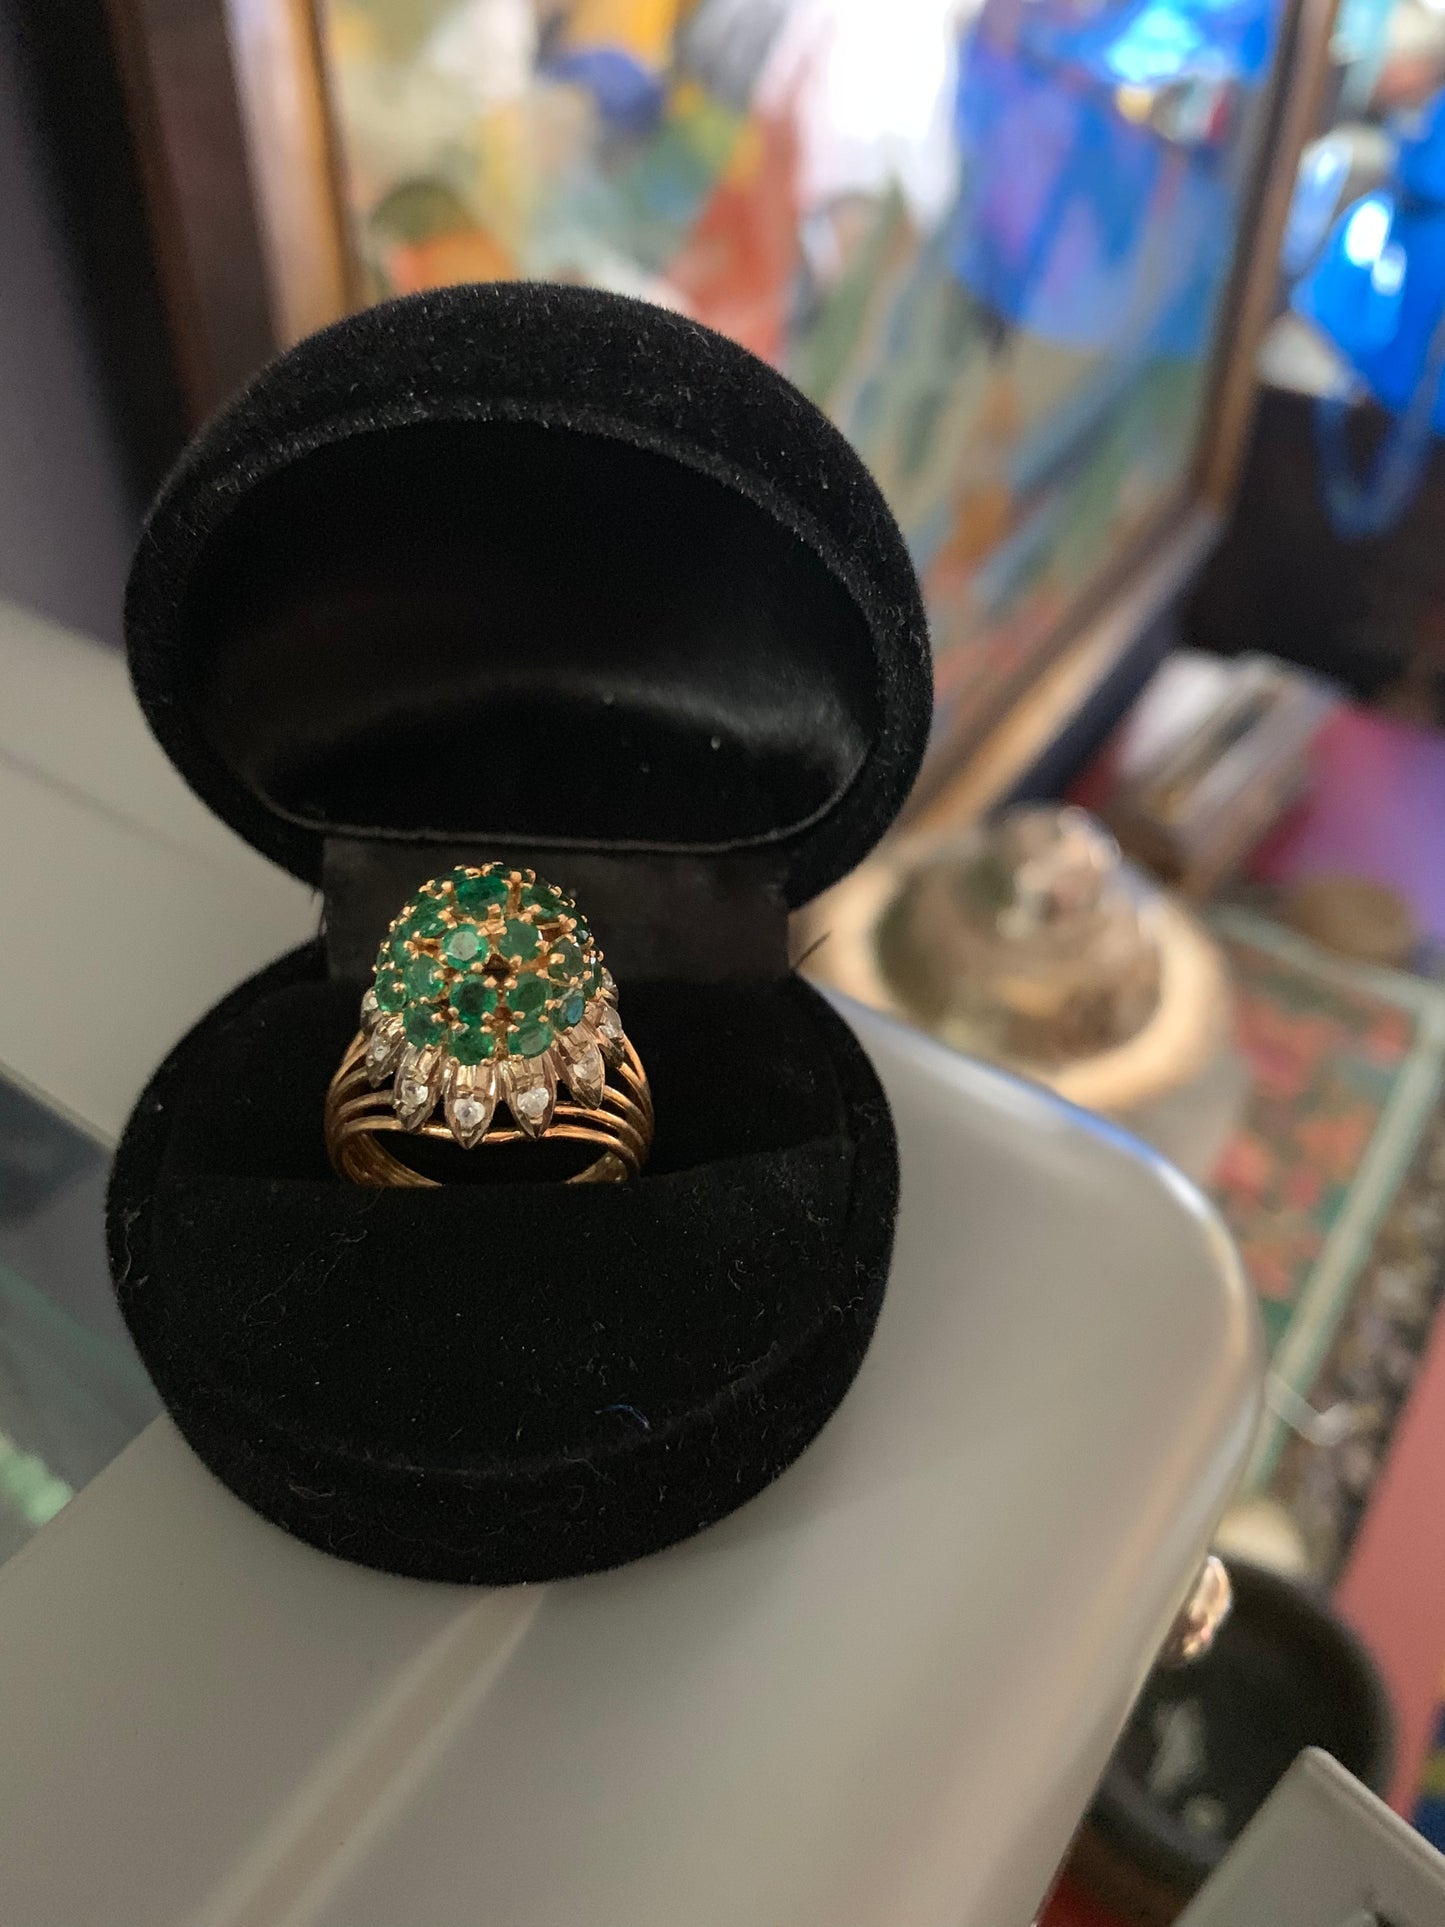 An emerald ring